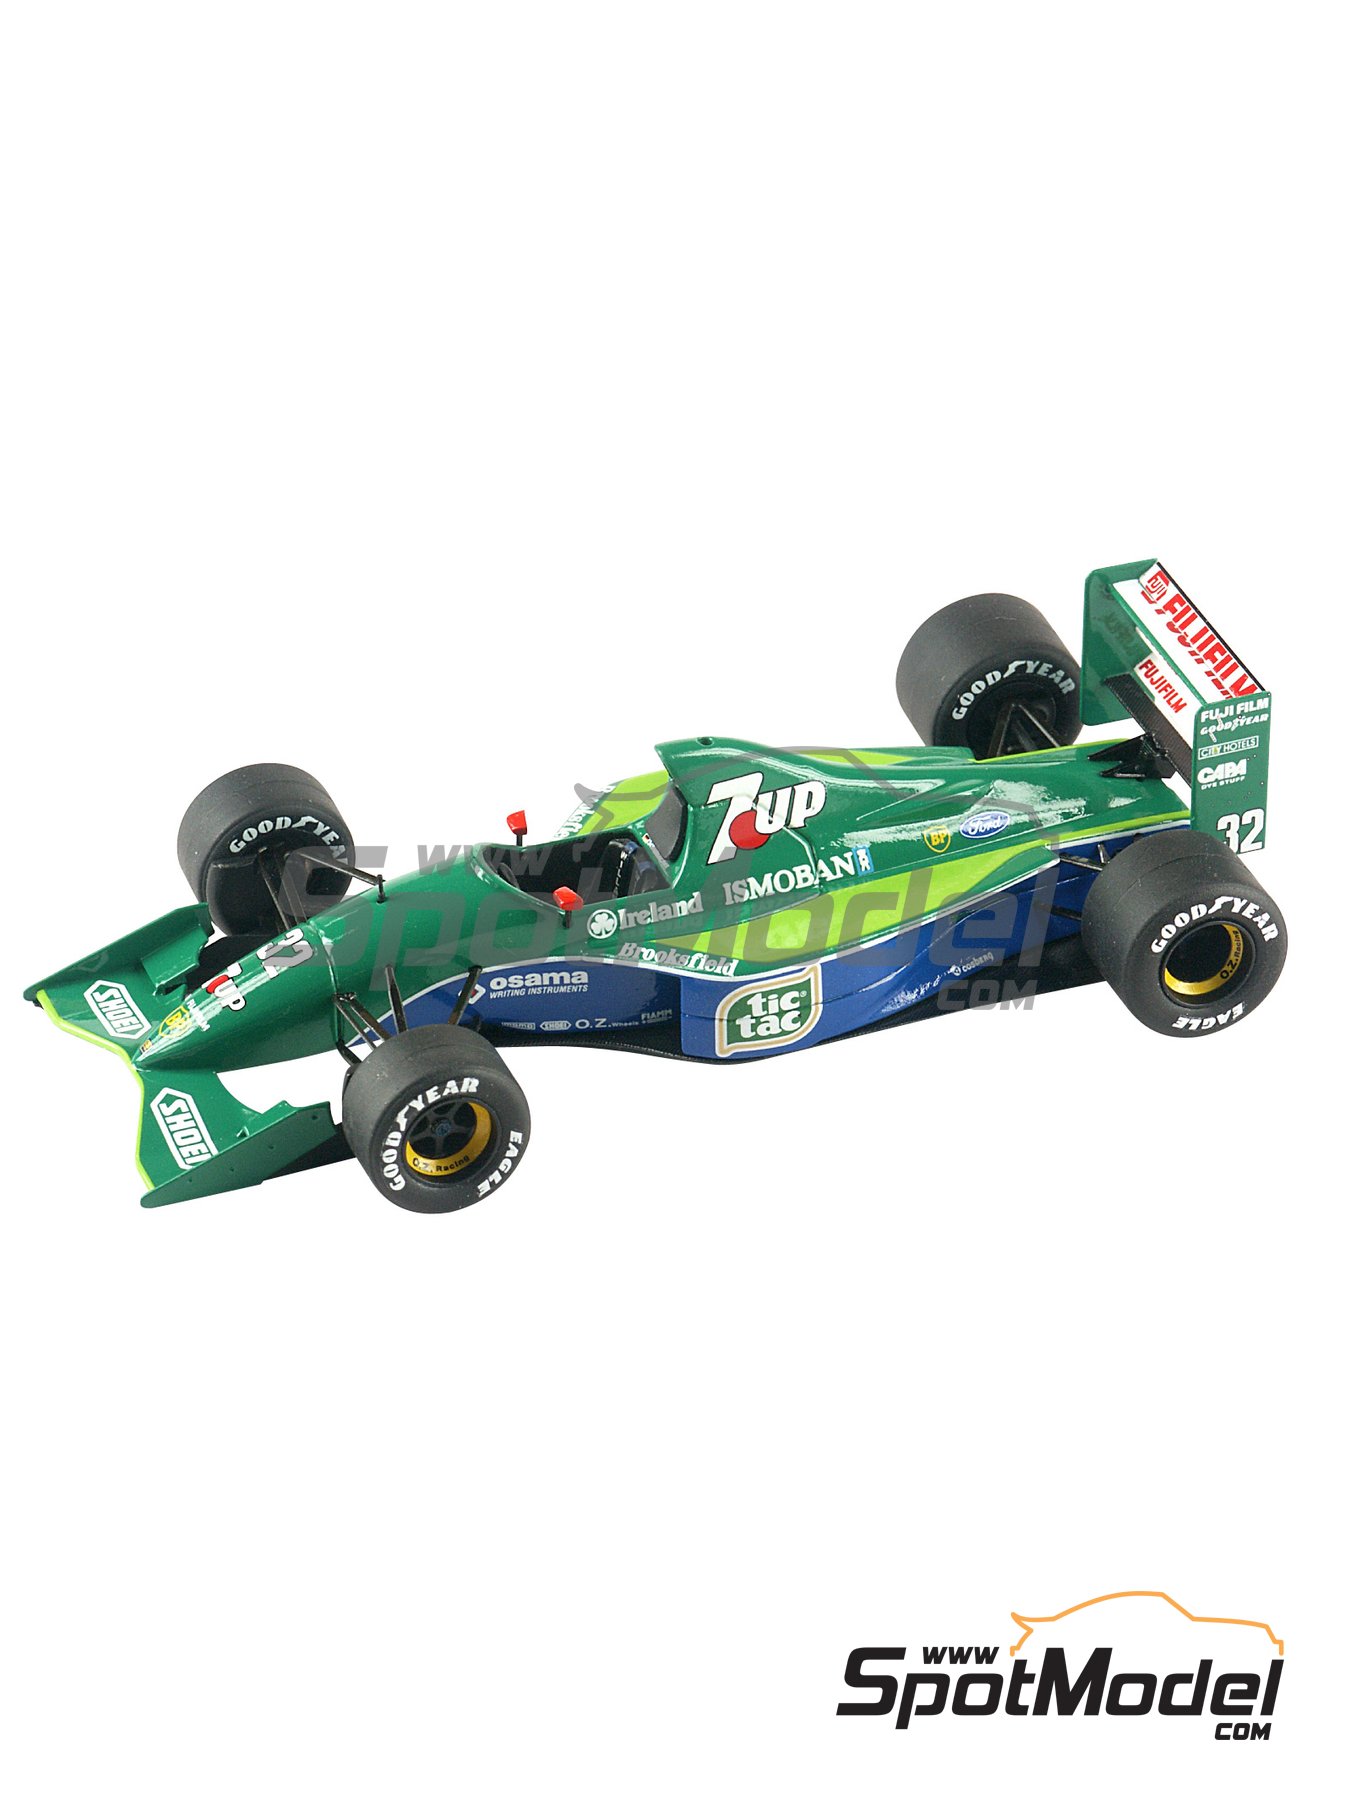 Tameo Kits: Model car kit 1/43 scale - Jordan Ford J191 Jordan Grand Prix Team sponsored by Fujifilm 7UP #32, 33 Andrea de Cesaris (IT), Michael Schumacher (DE) - Belgian 1 Grand Prix 1991 (ref. TMK322) SpotModel